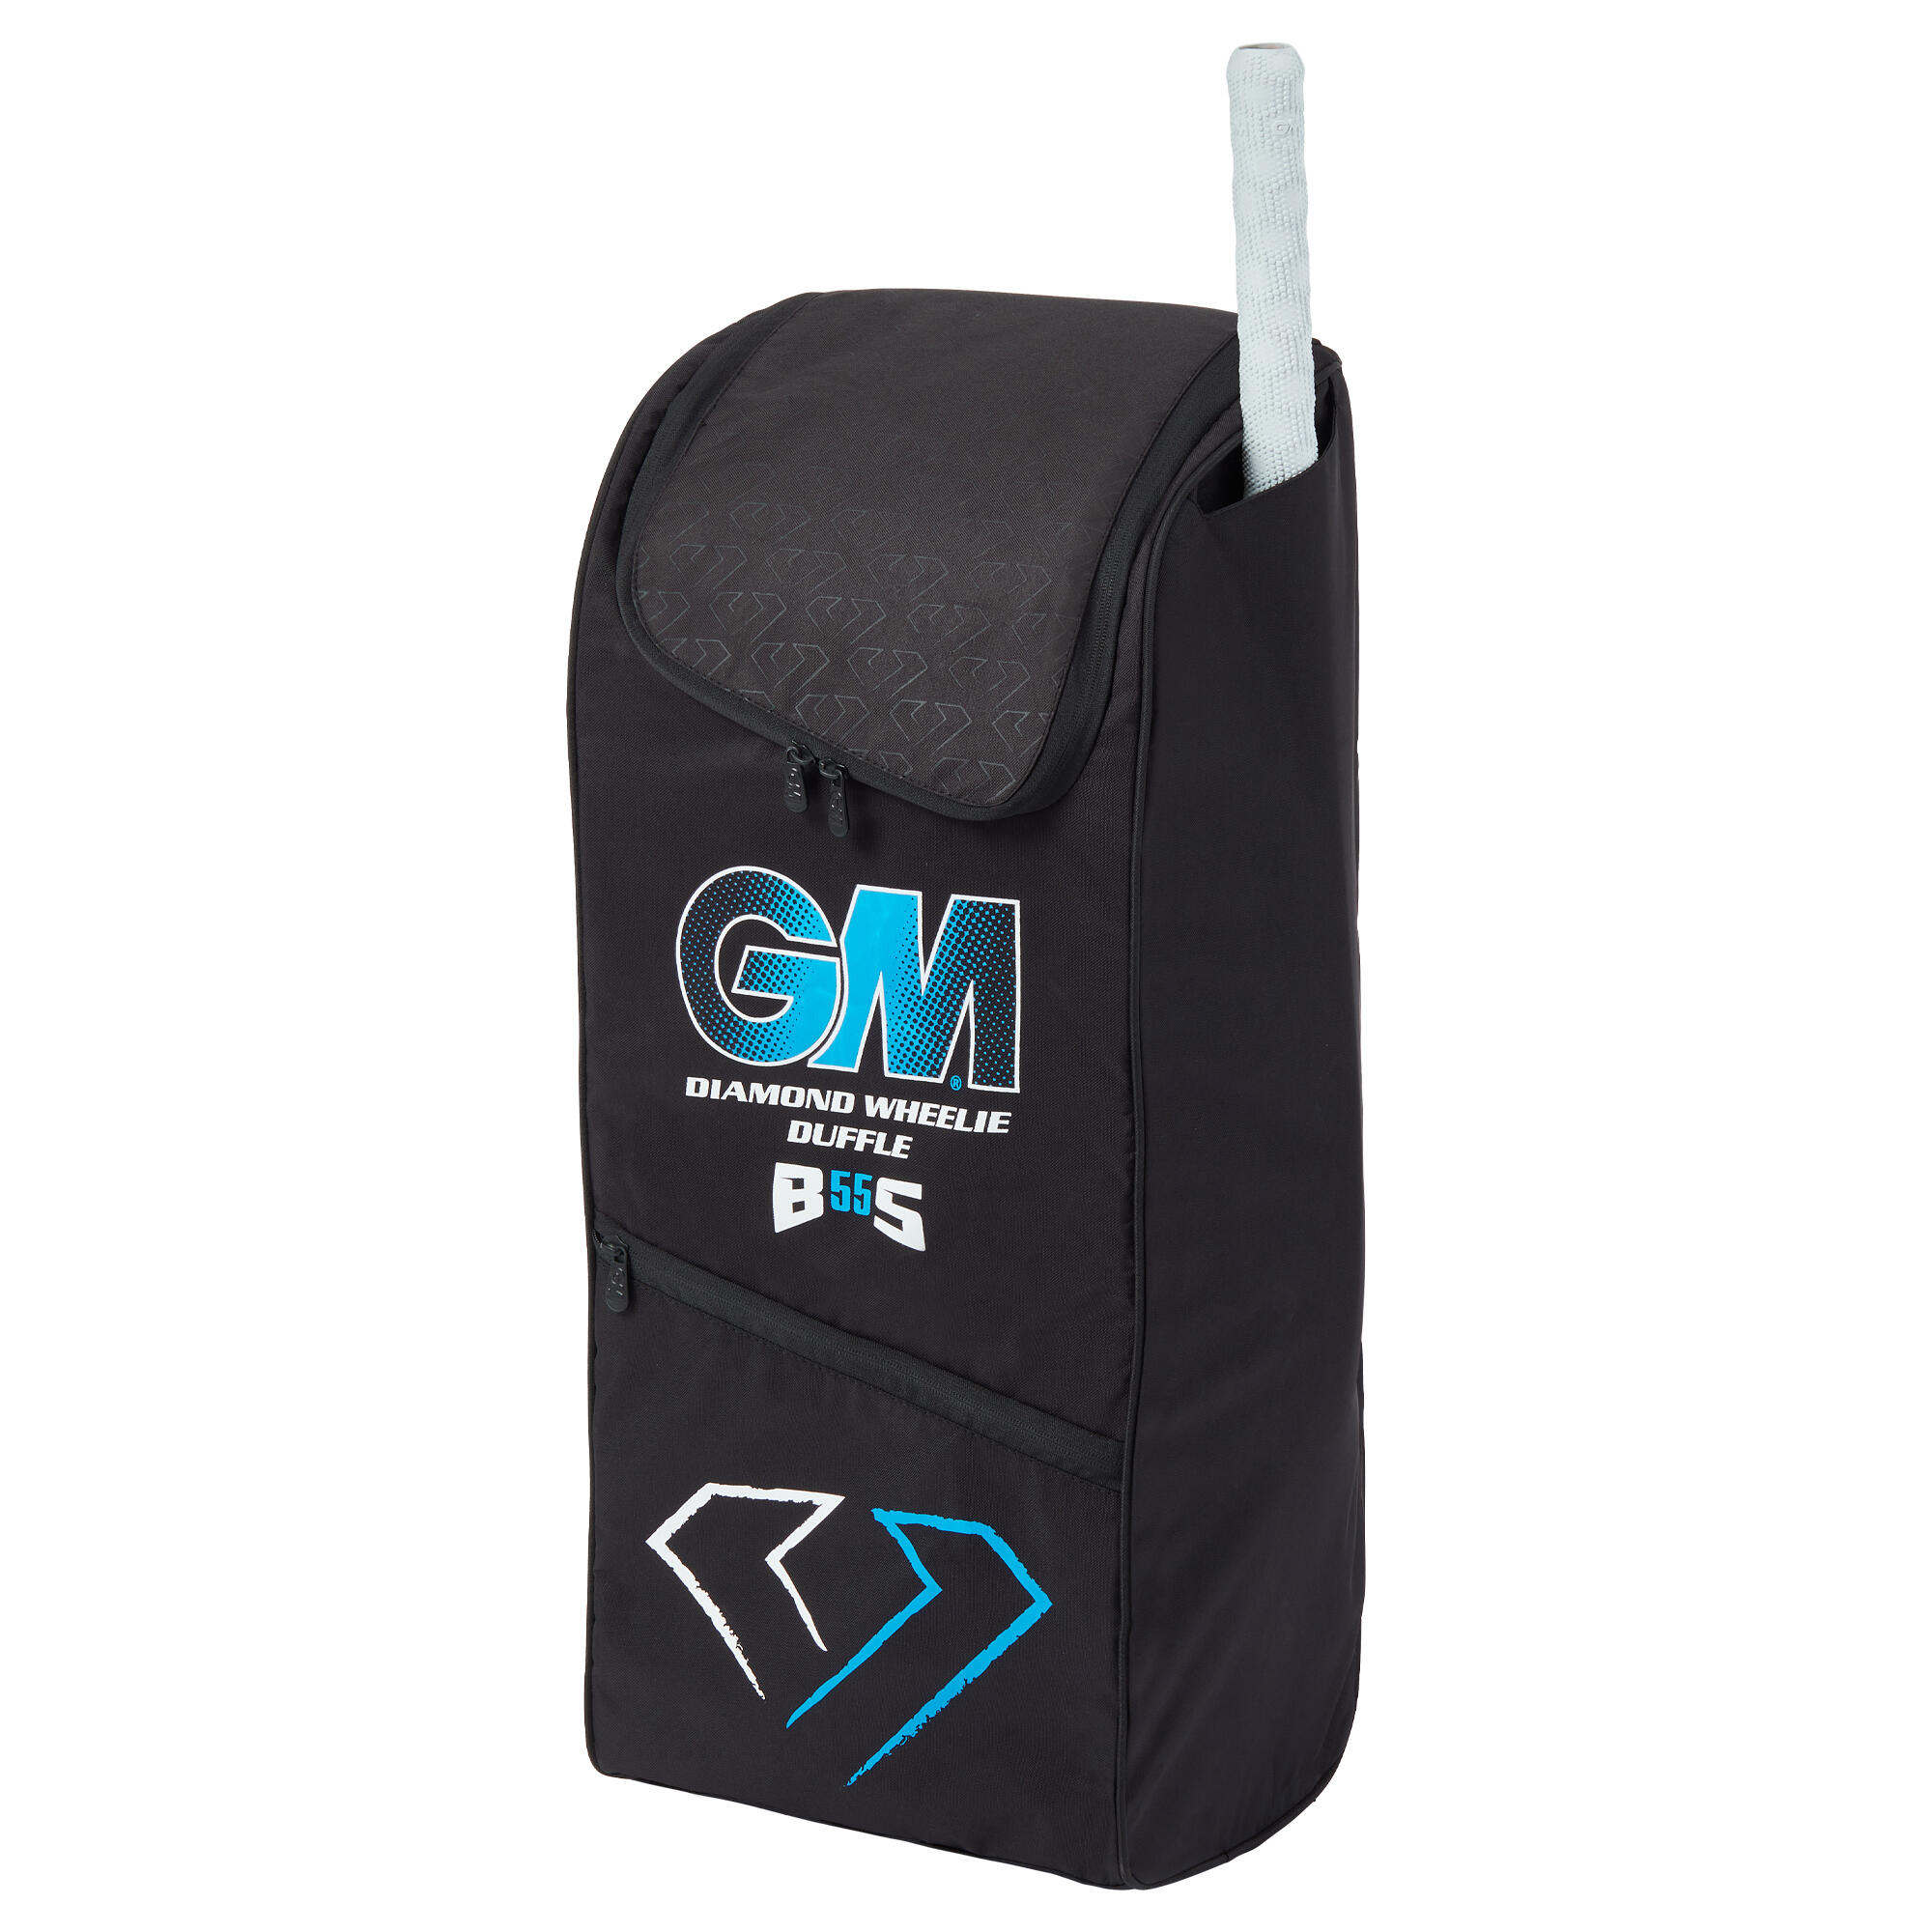 GM Diamond 606 Wheelie Duffle Cricket bag 2/3